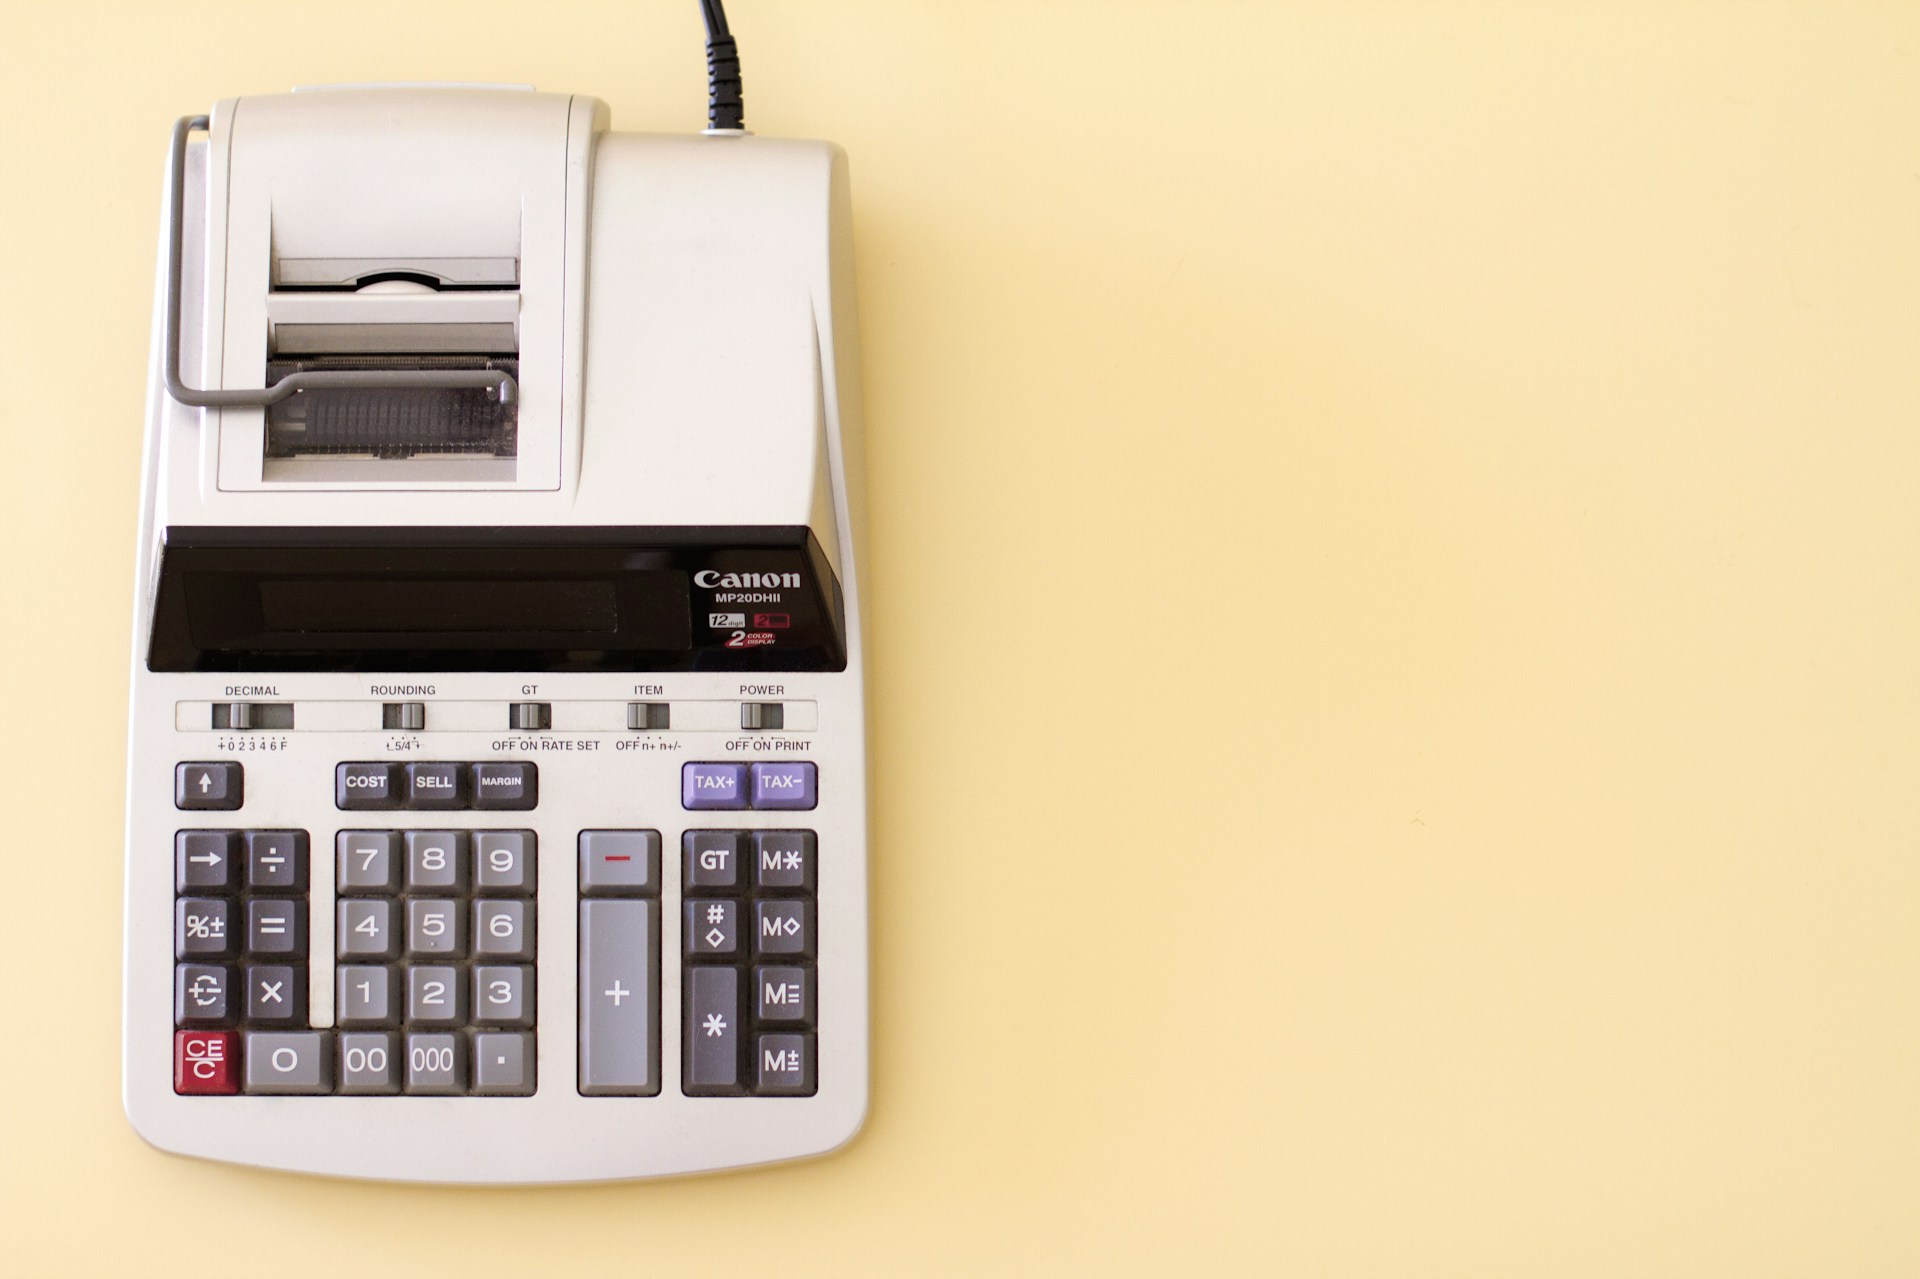 Canon MP20DH II accounting calculator on yellow desk